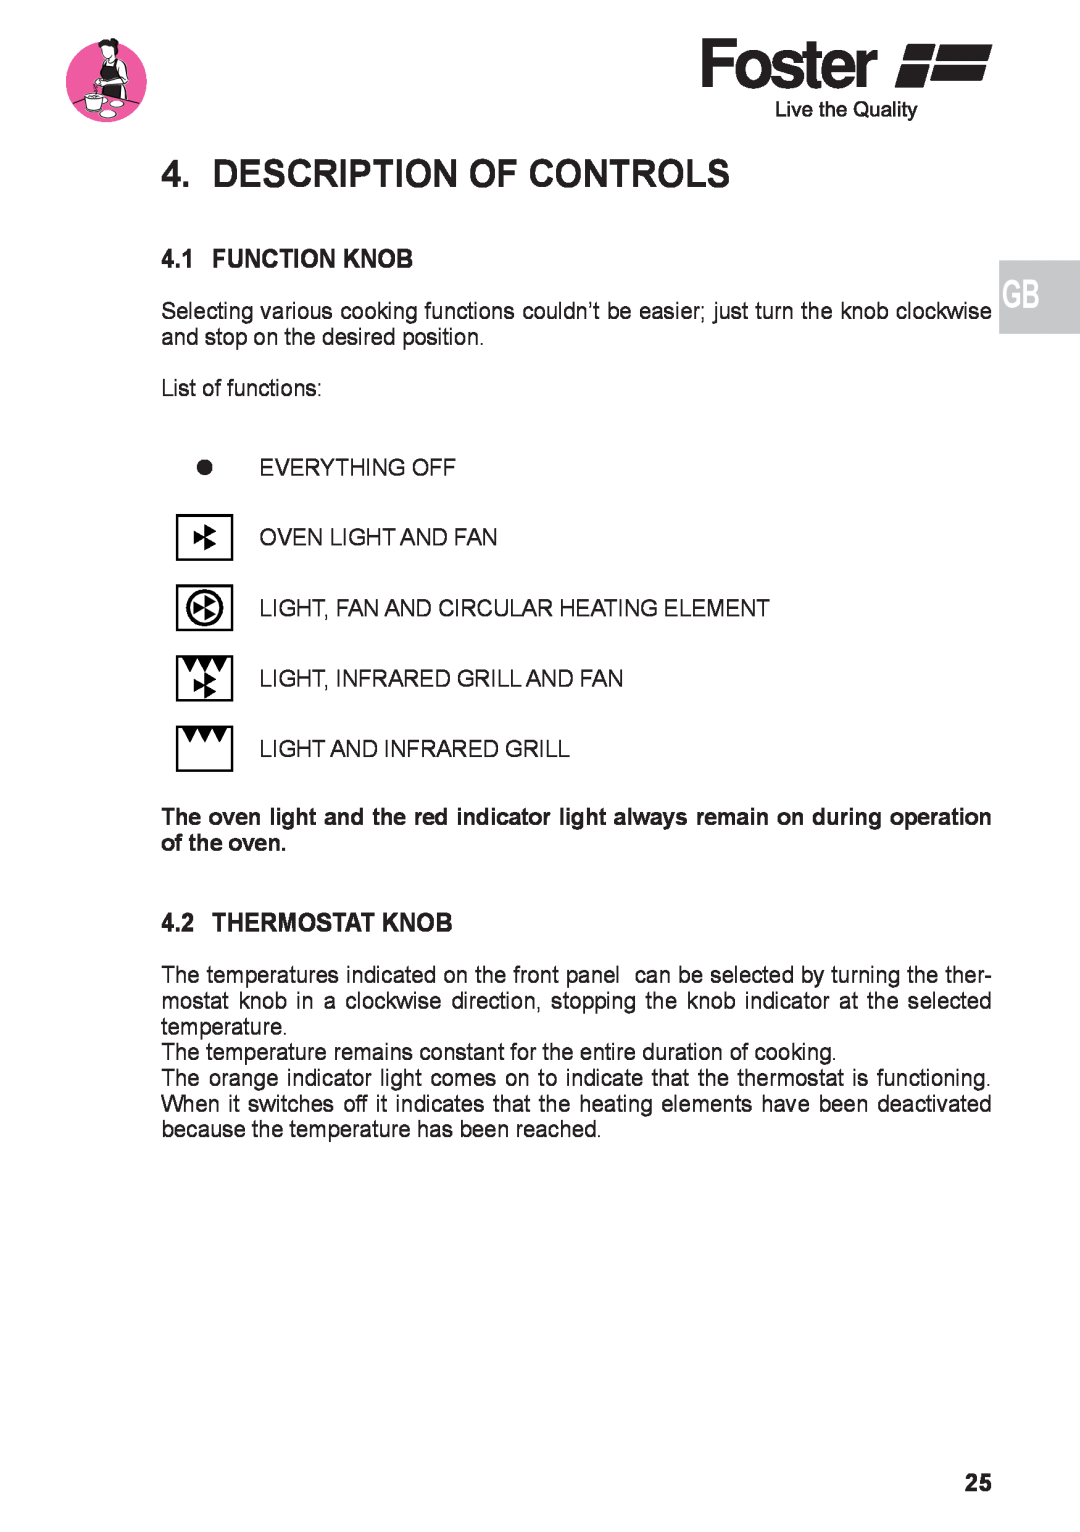 Foster 7172 042, 7170 052 user manual Description Of Controls, Function Knob, Thermostat Knob 